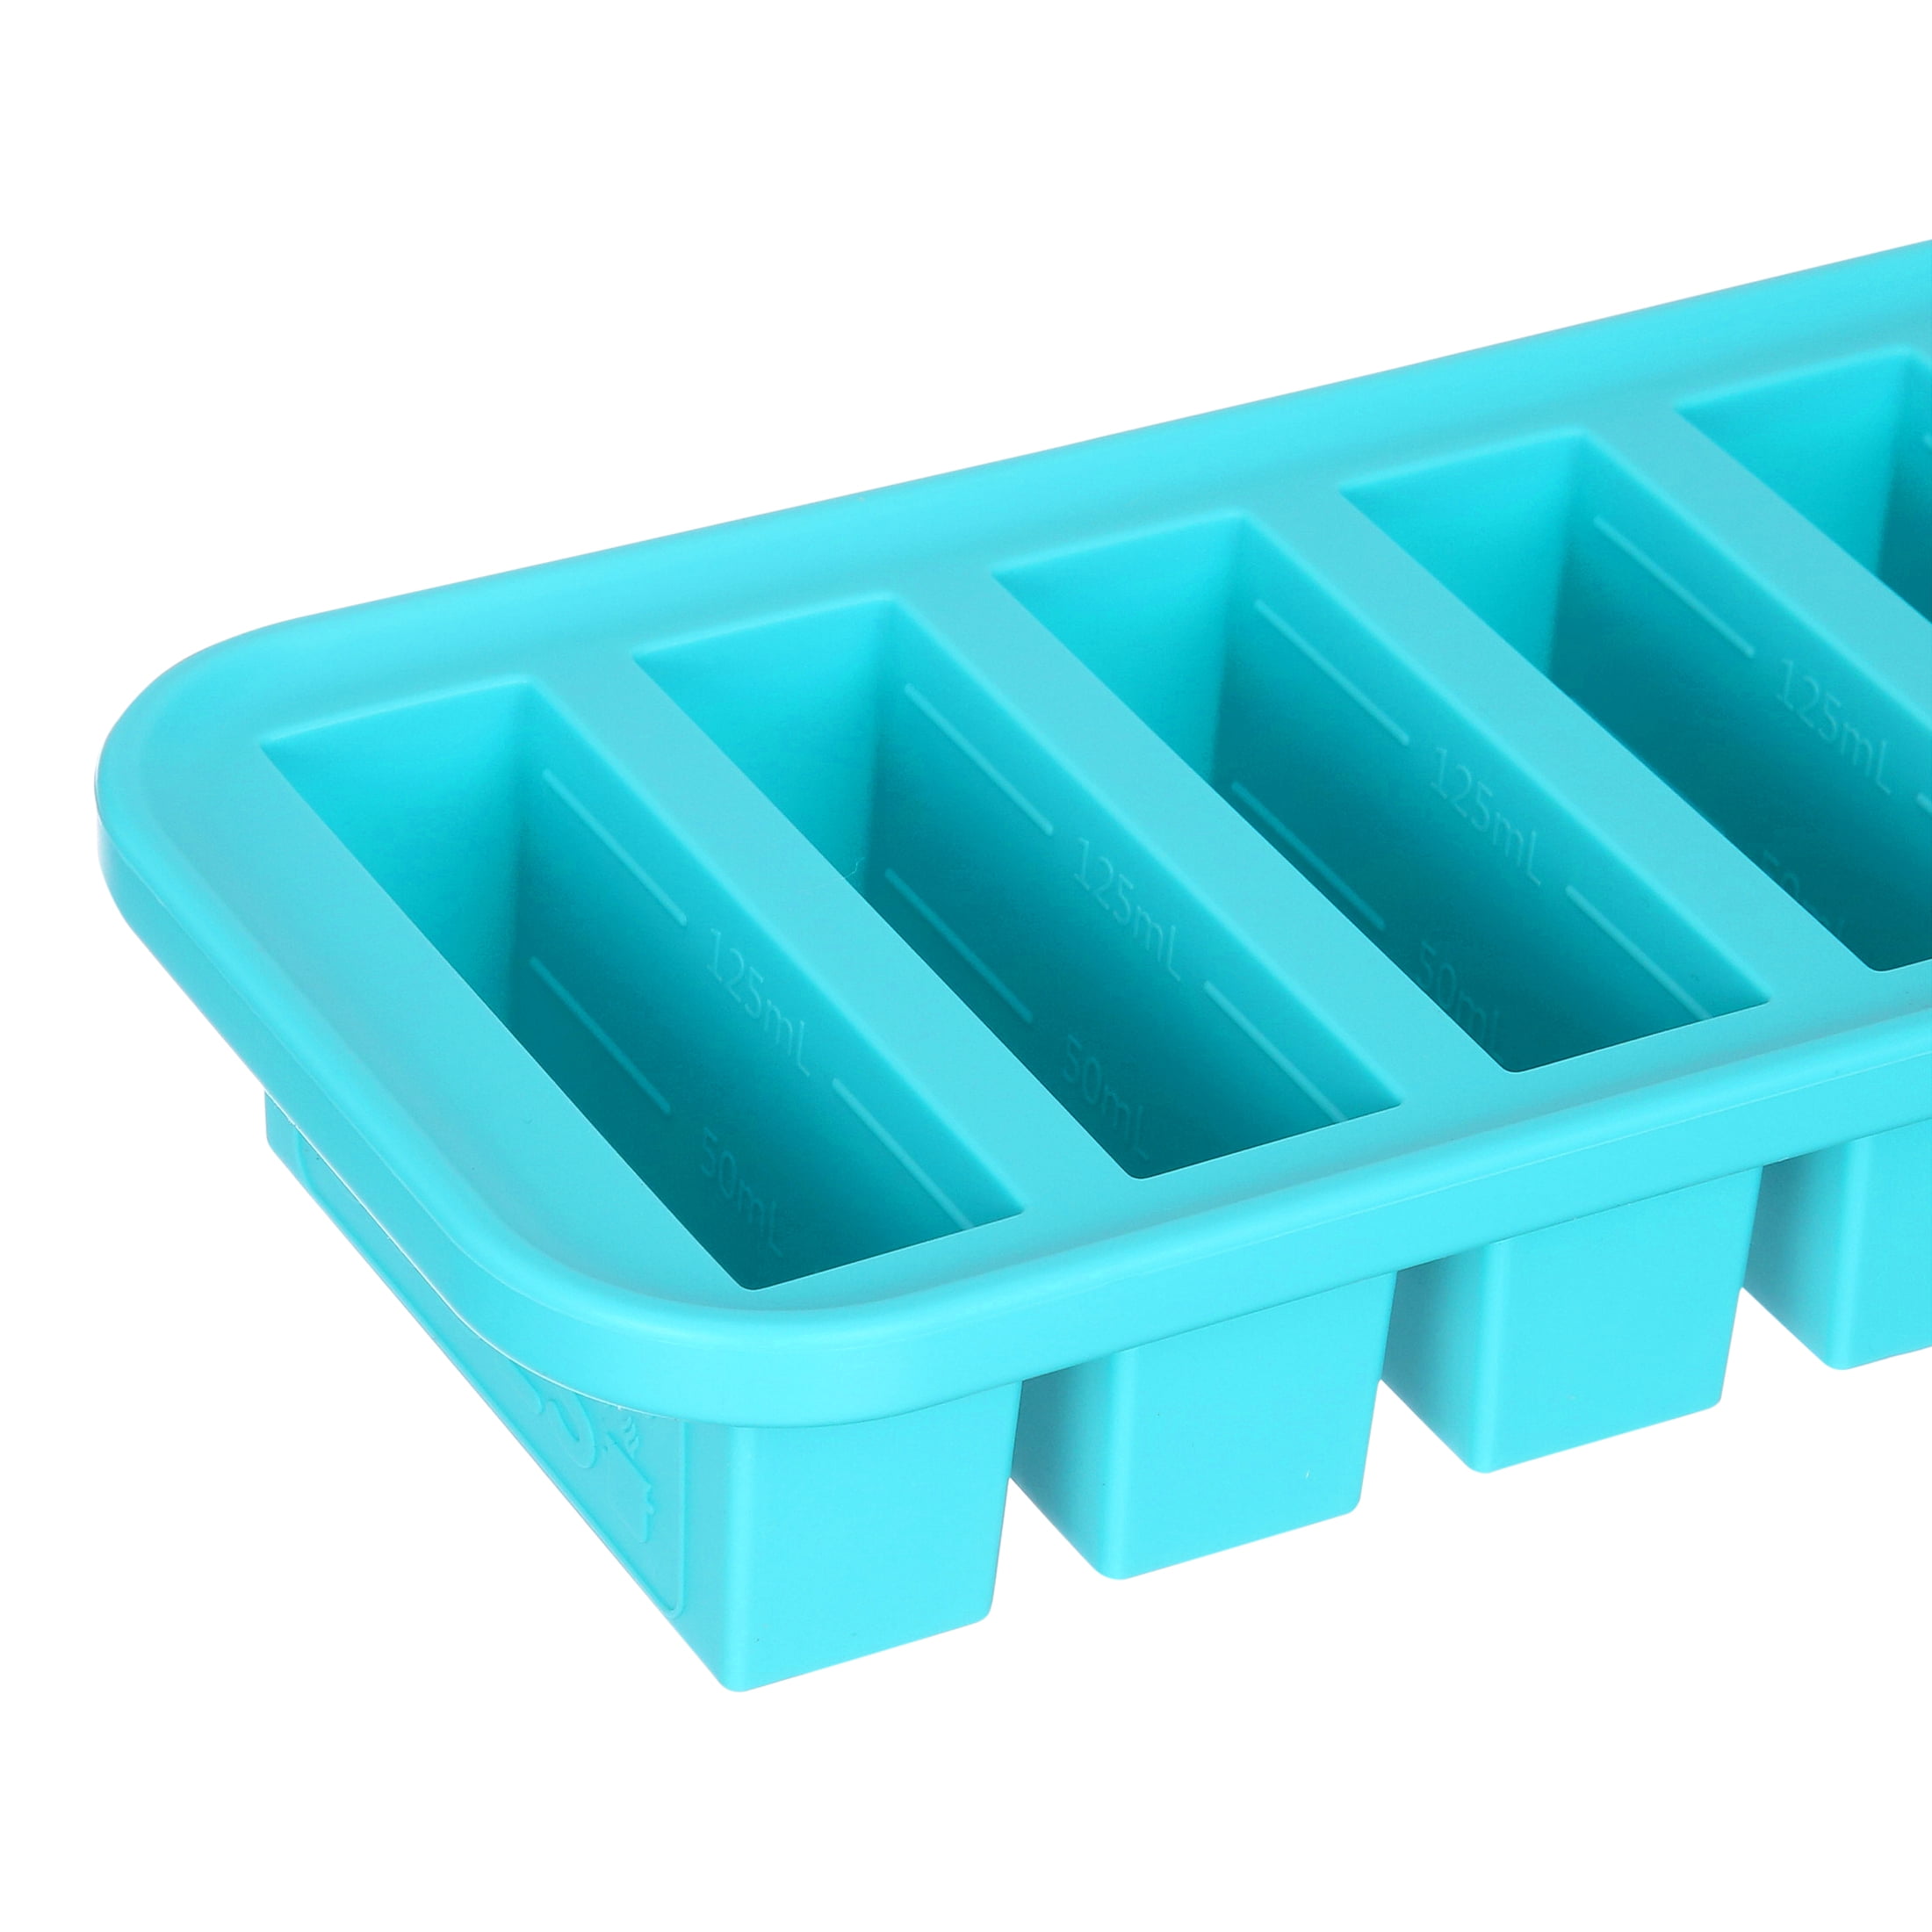 Peak Freezer Cube Trays - Refill Goodness